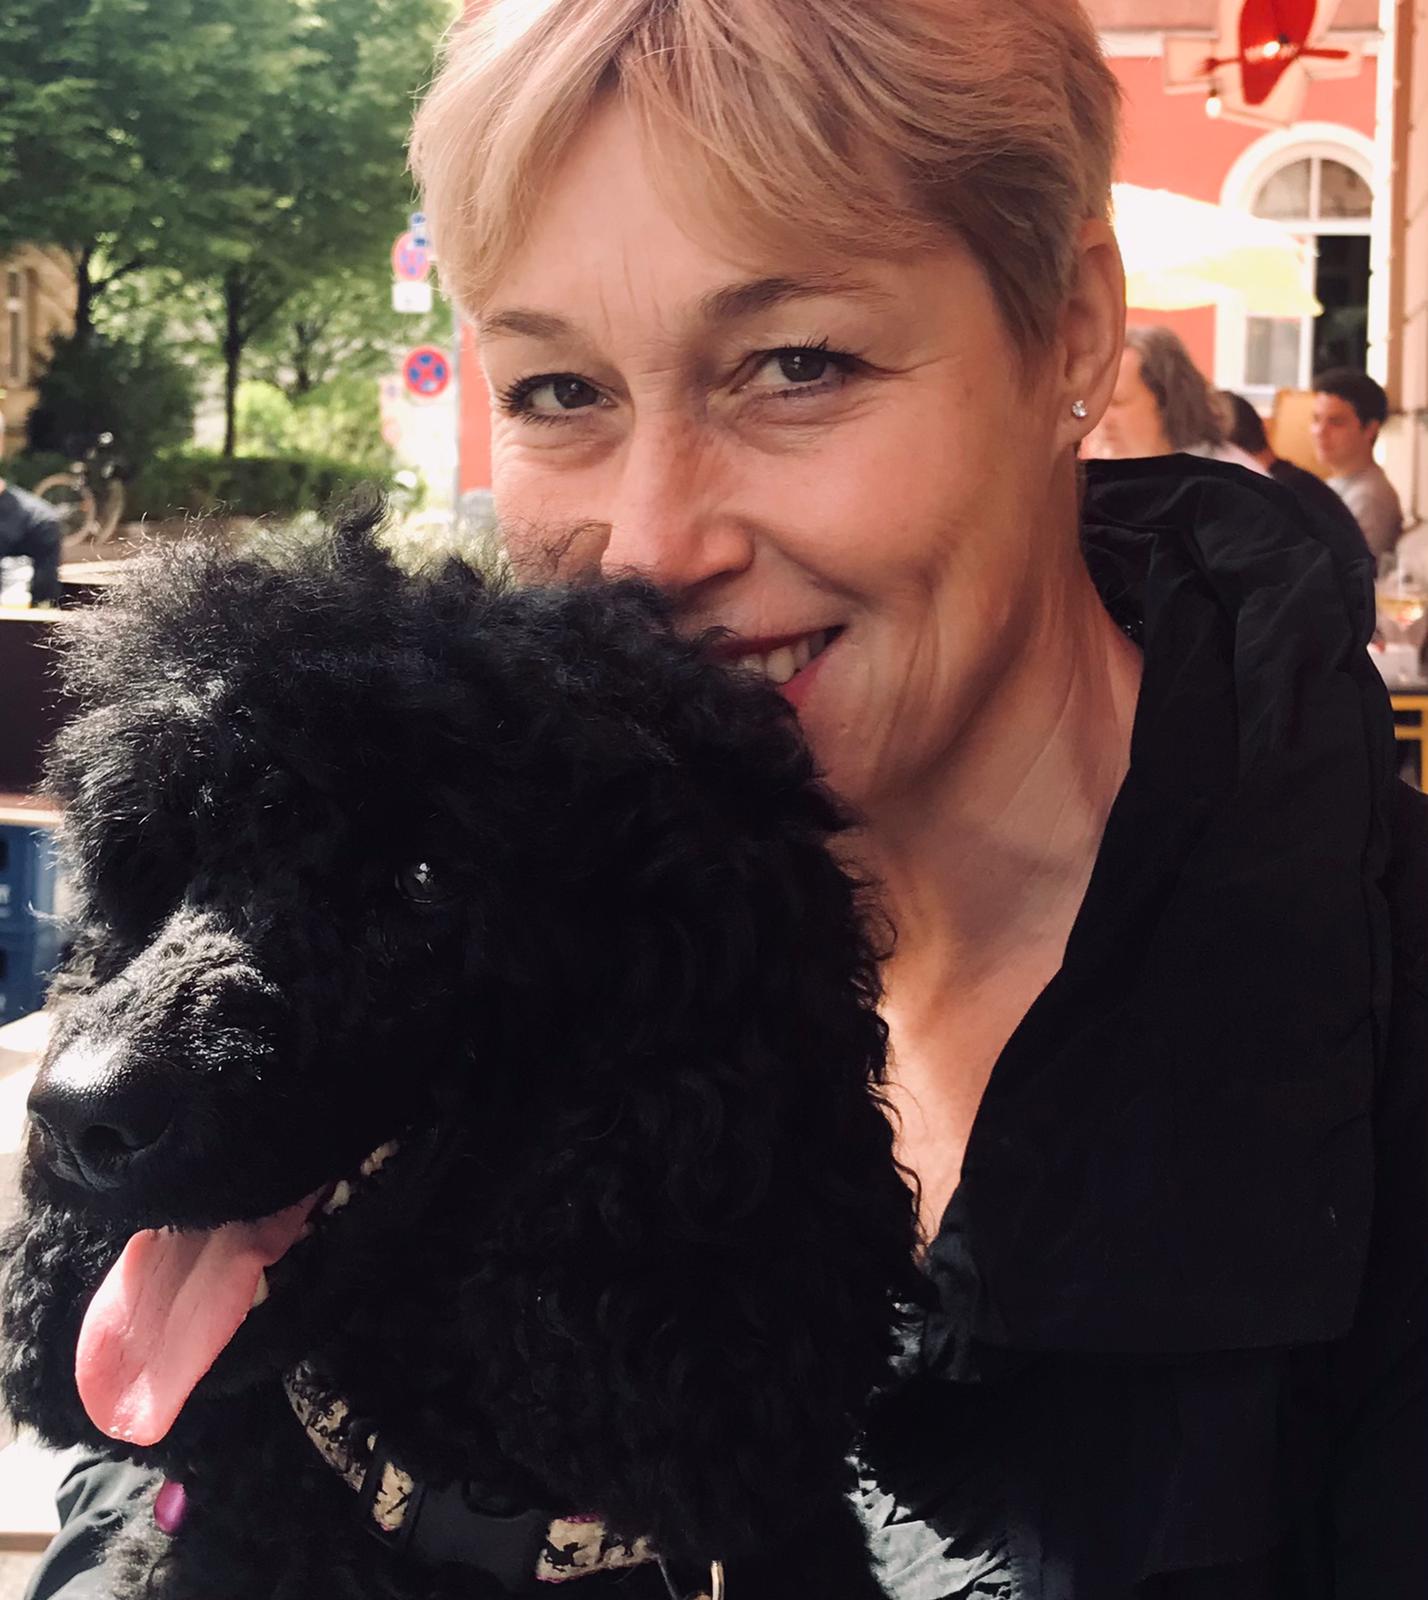 Susanne Hörzing & Lila - Hundeausbildung | teamtraining Mensch & Hund | München